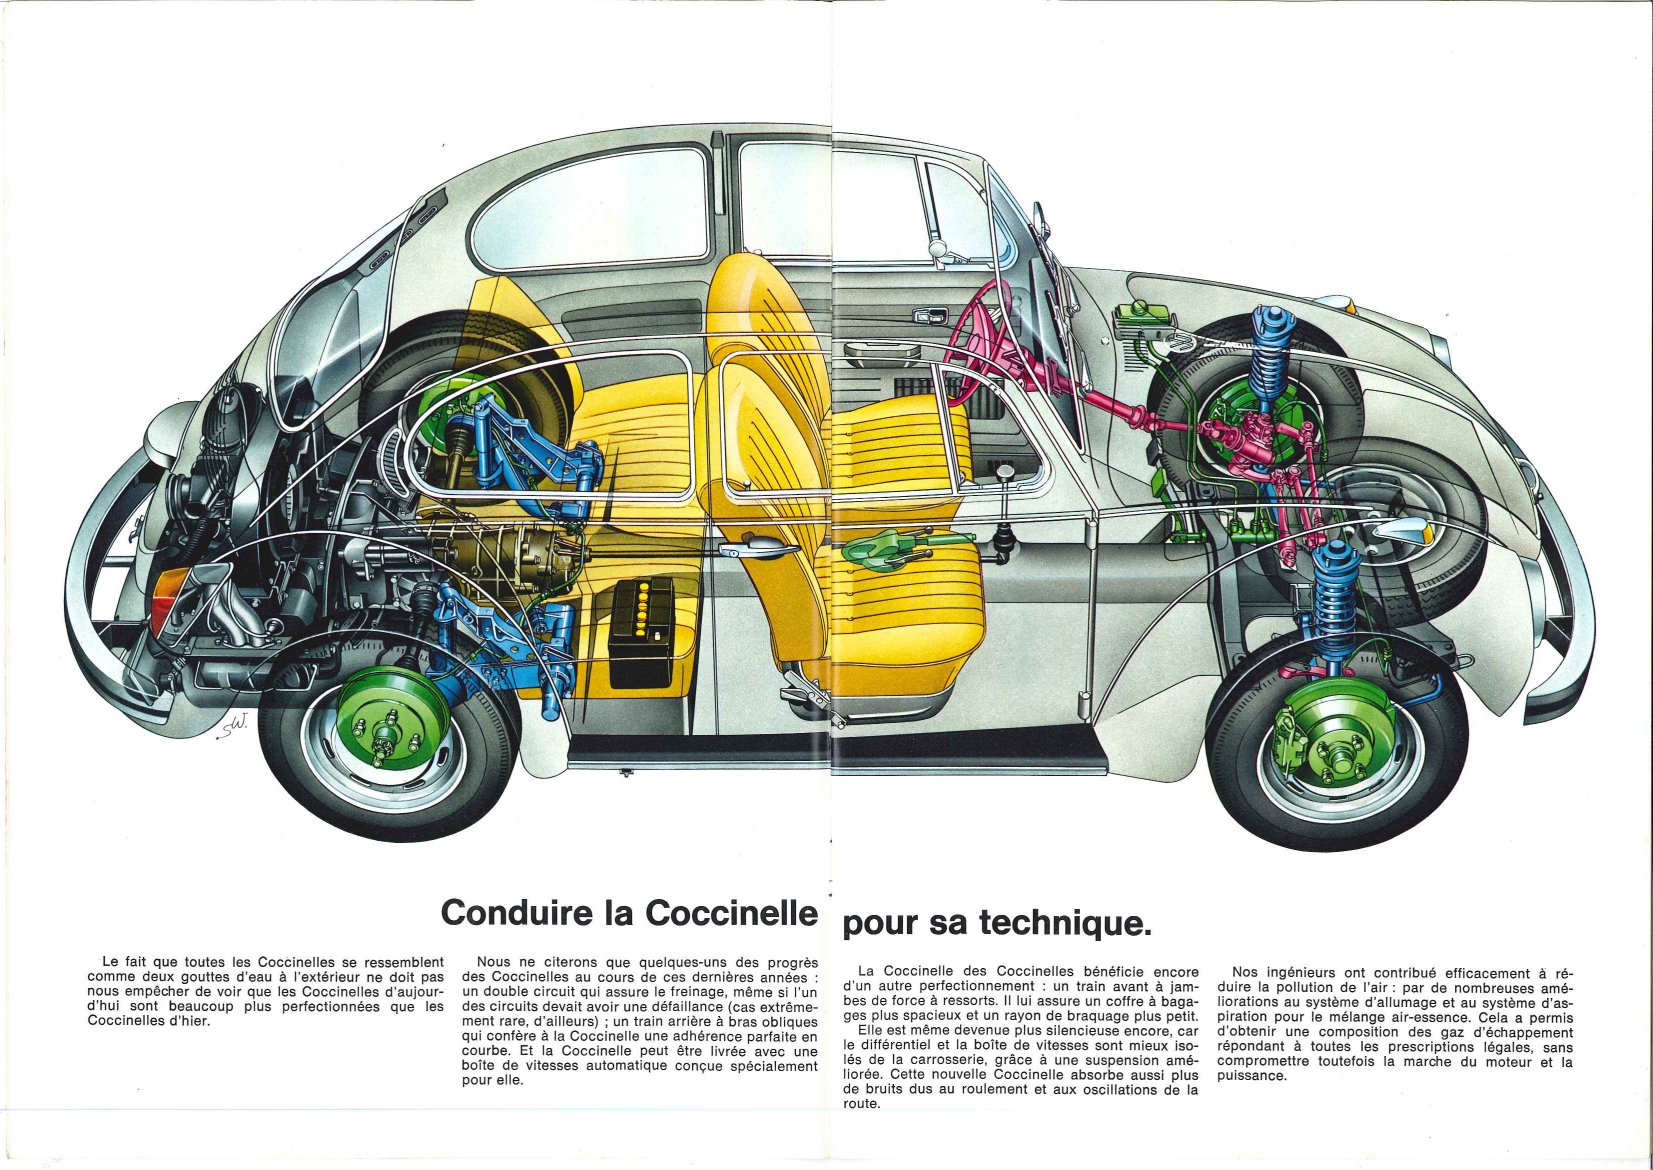 TheSamba.com :: VW Archives - 1972 VW Beetle Sales Brochure - French